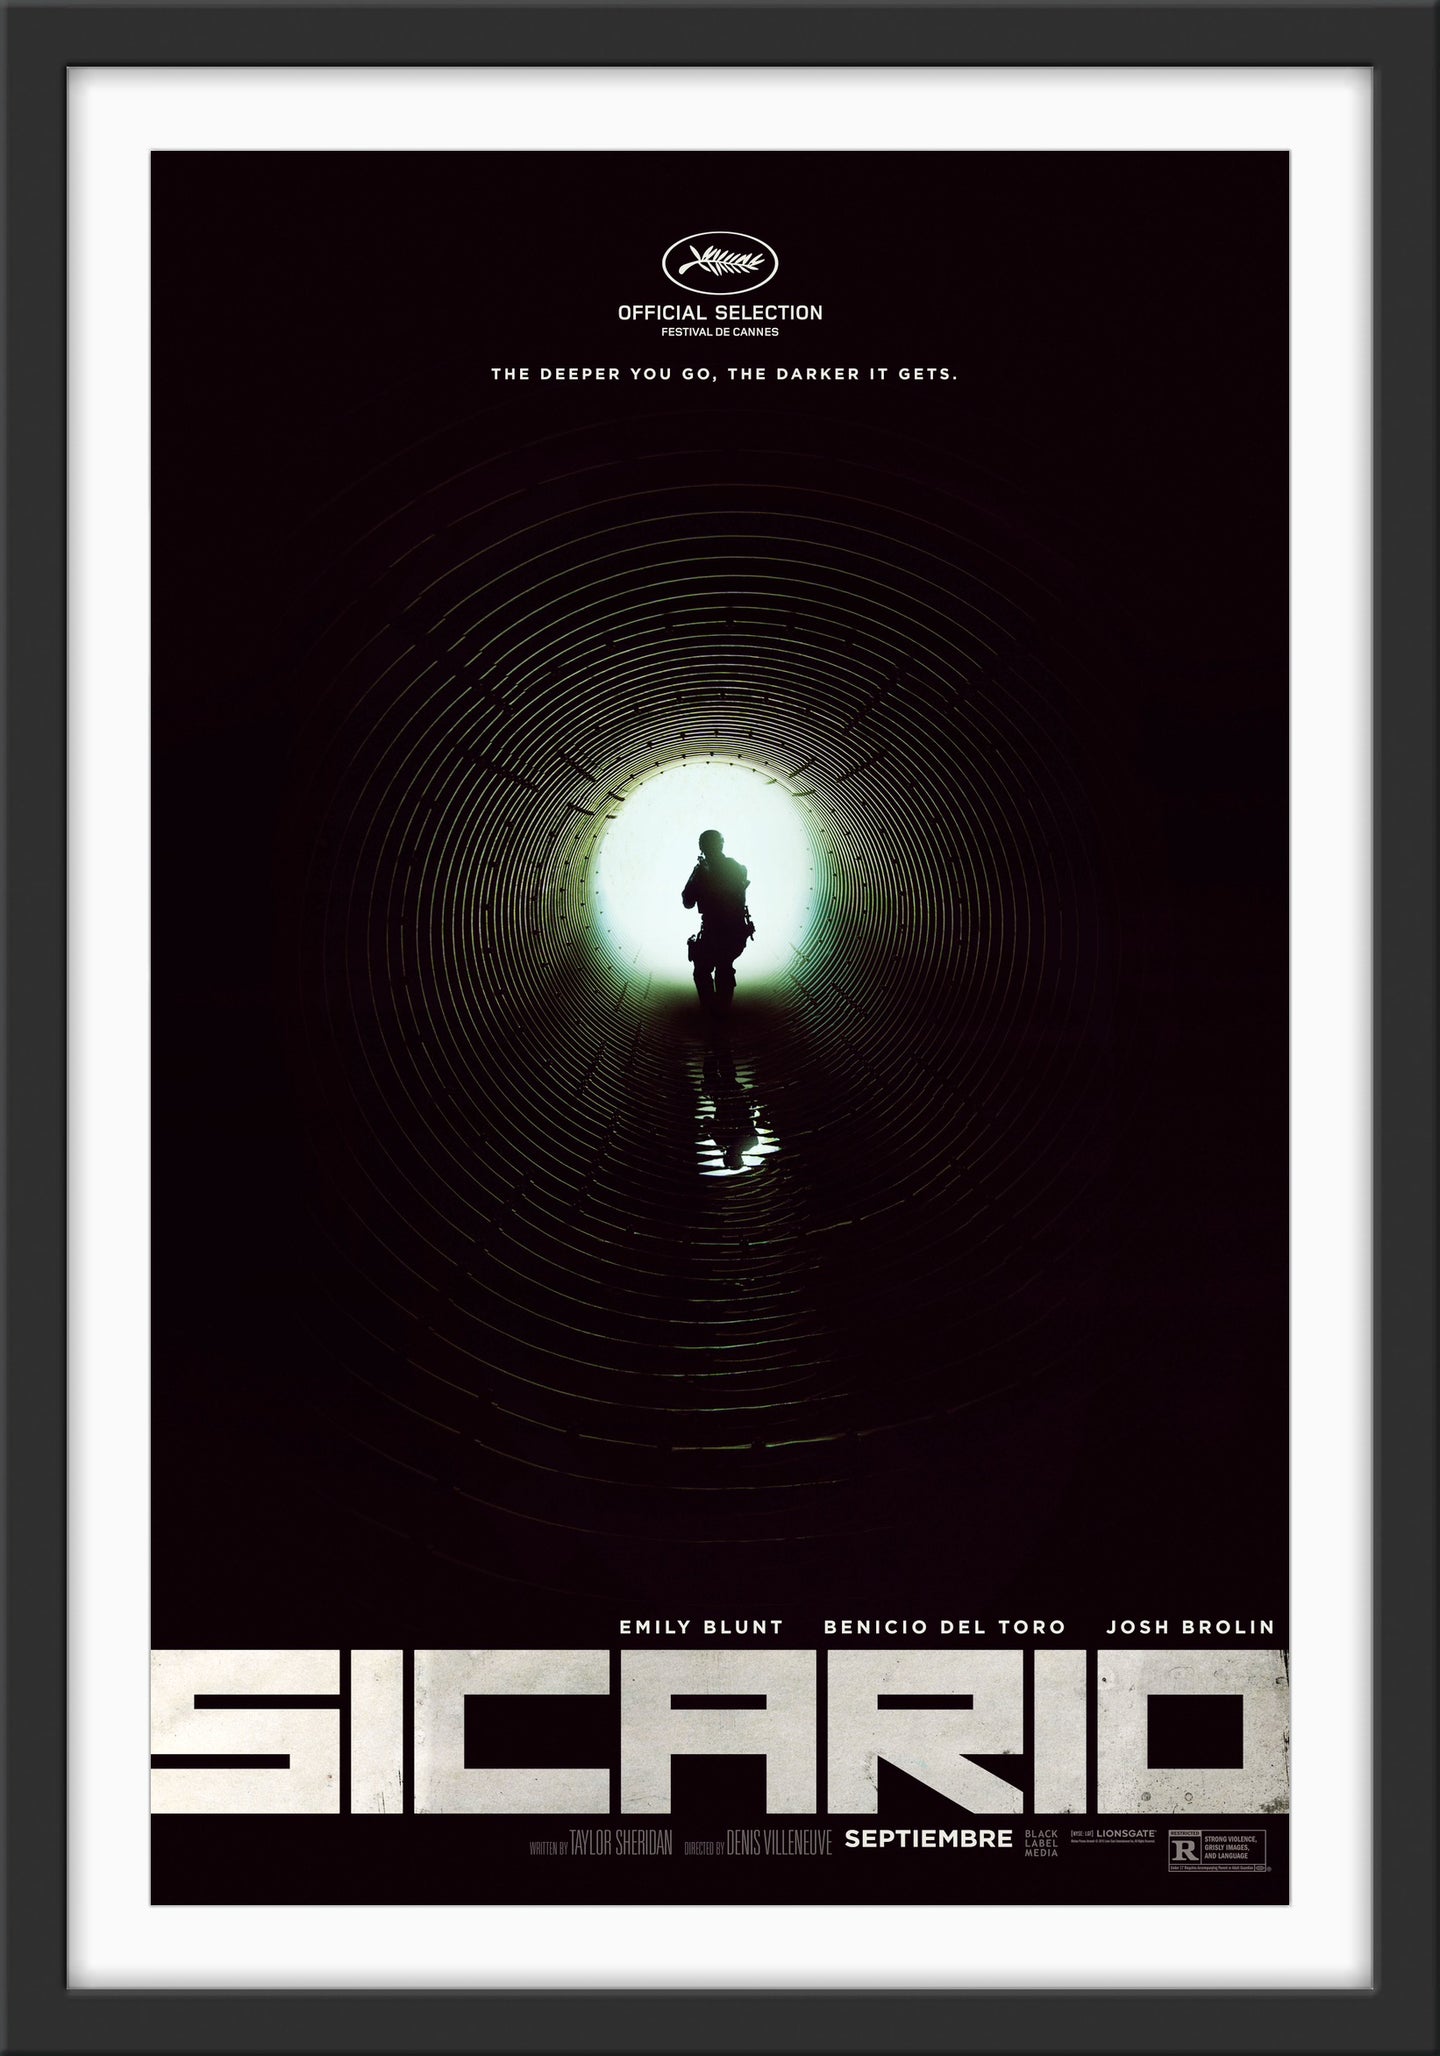 An original movie poster for the film Sicario